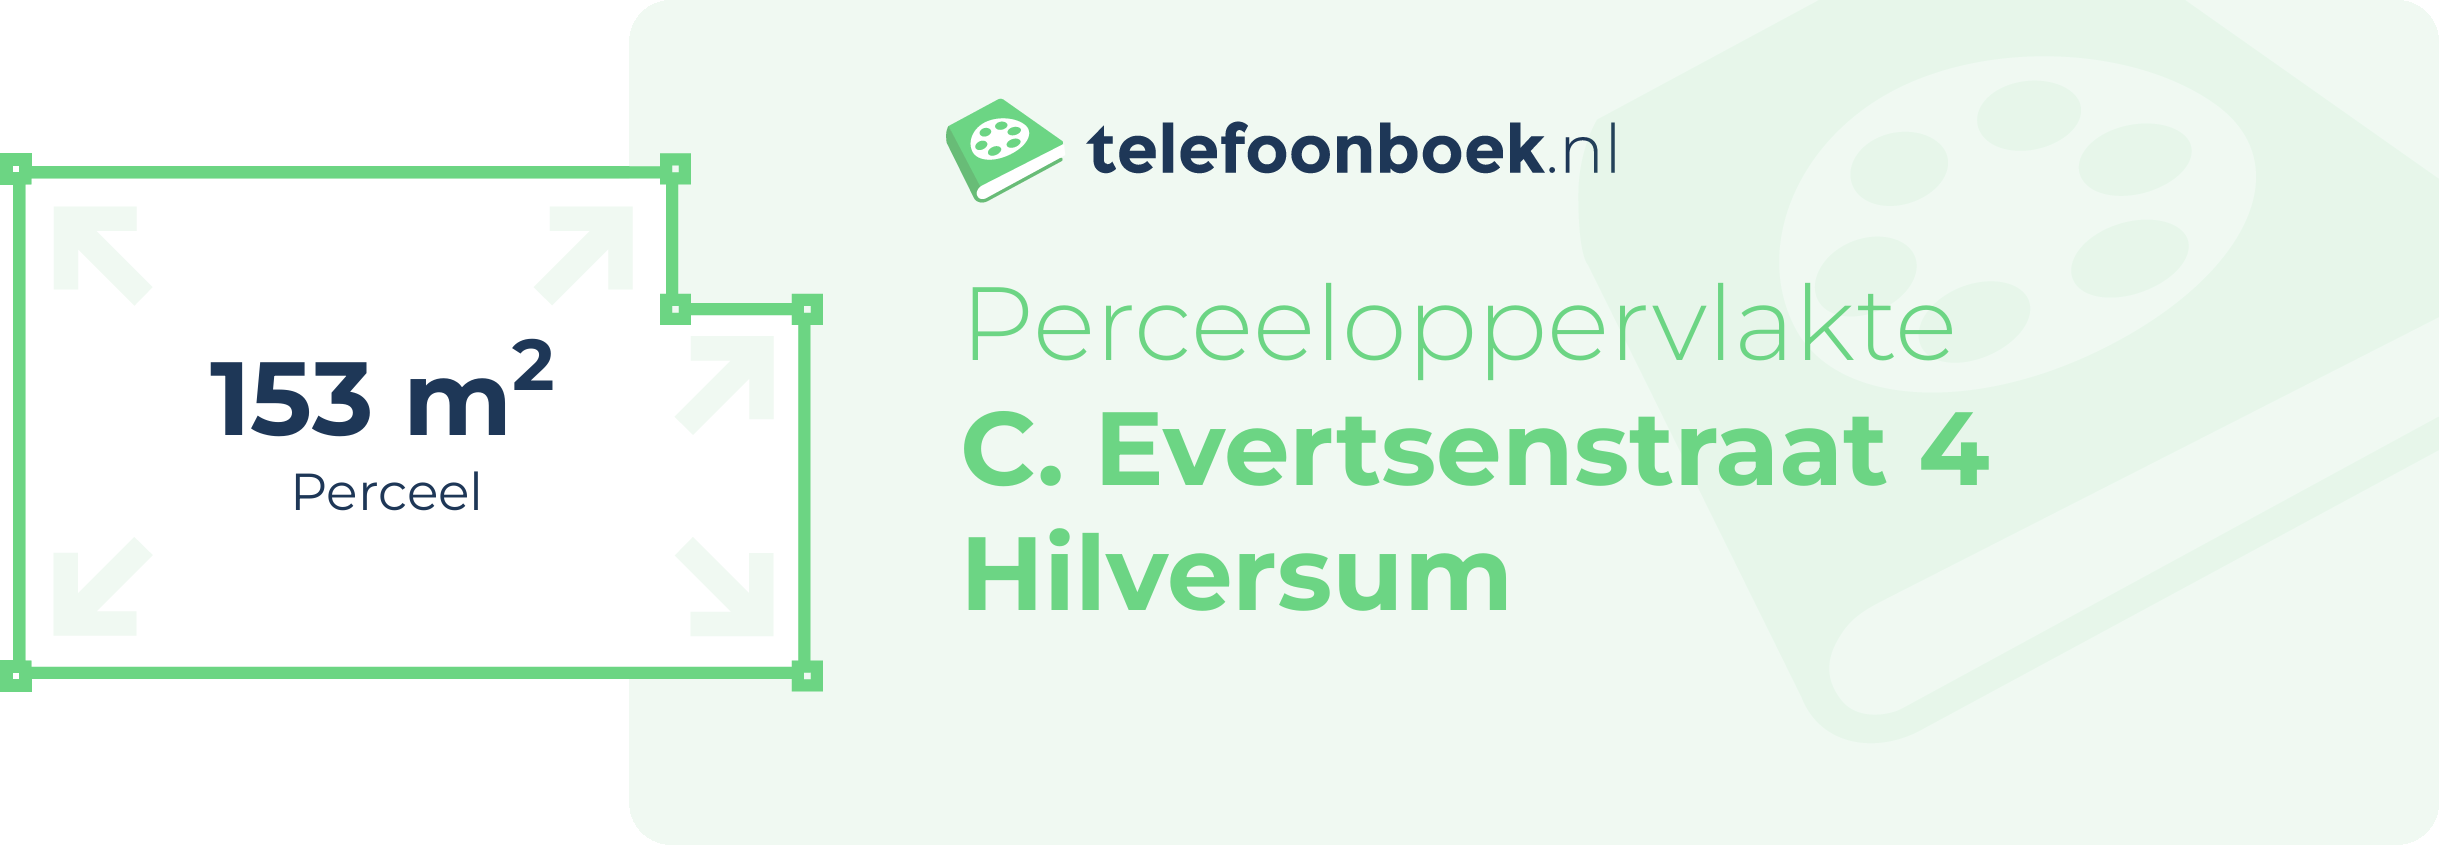 Perceeloppervlakte C. Evertsenstraat 4 Hilversum